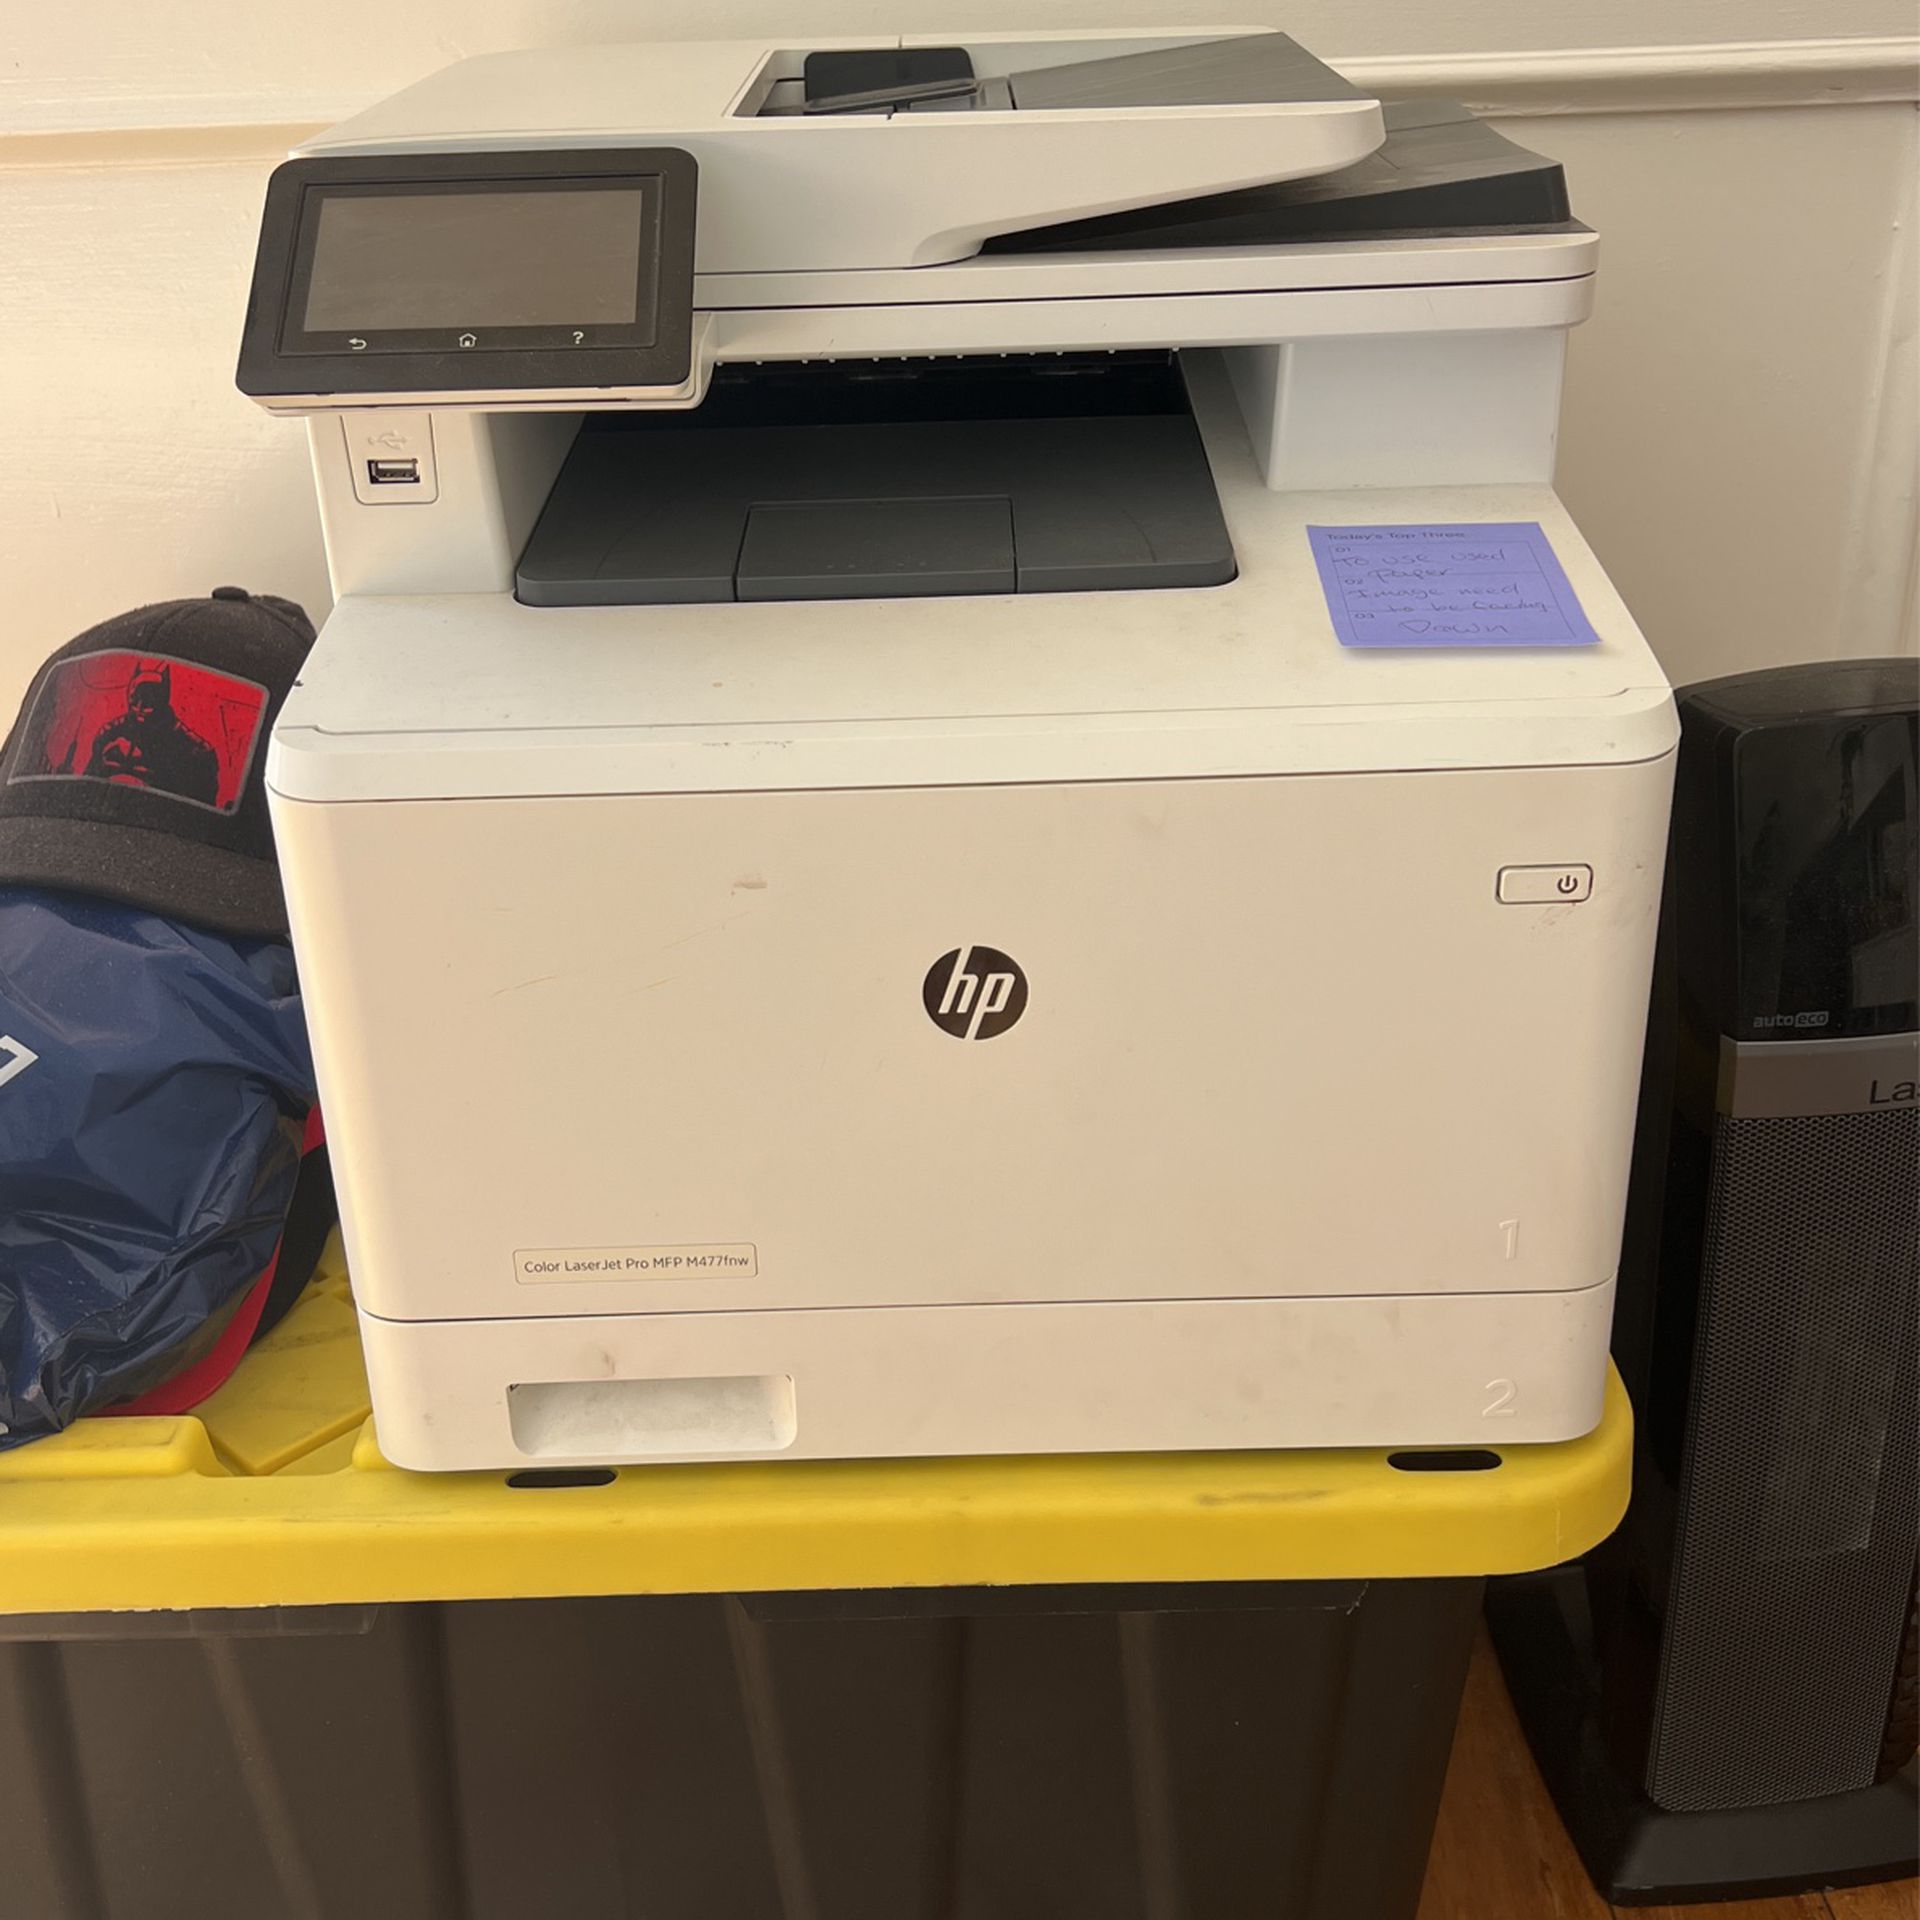 HP-Color laserjet pro mfp m477fnd printer “Wireless”